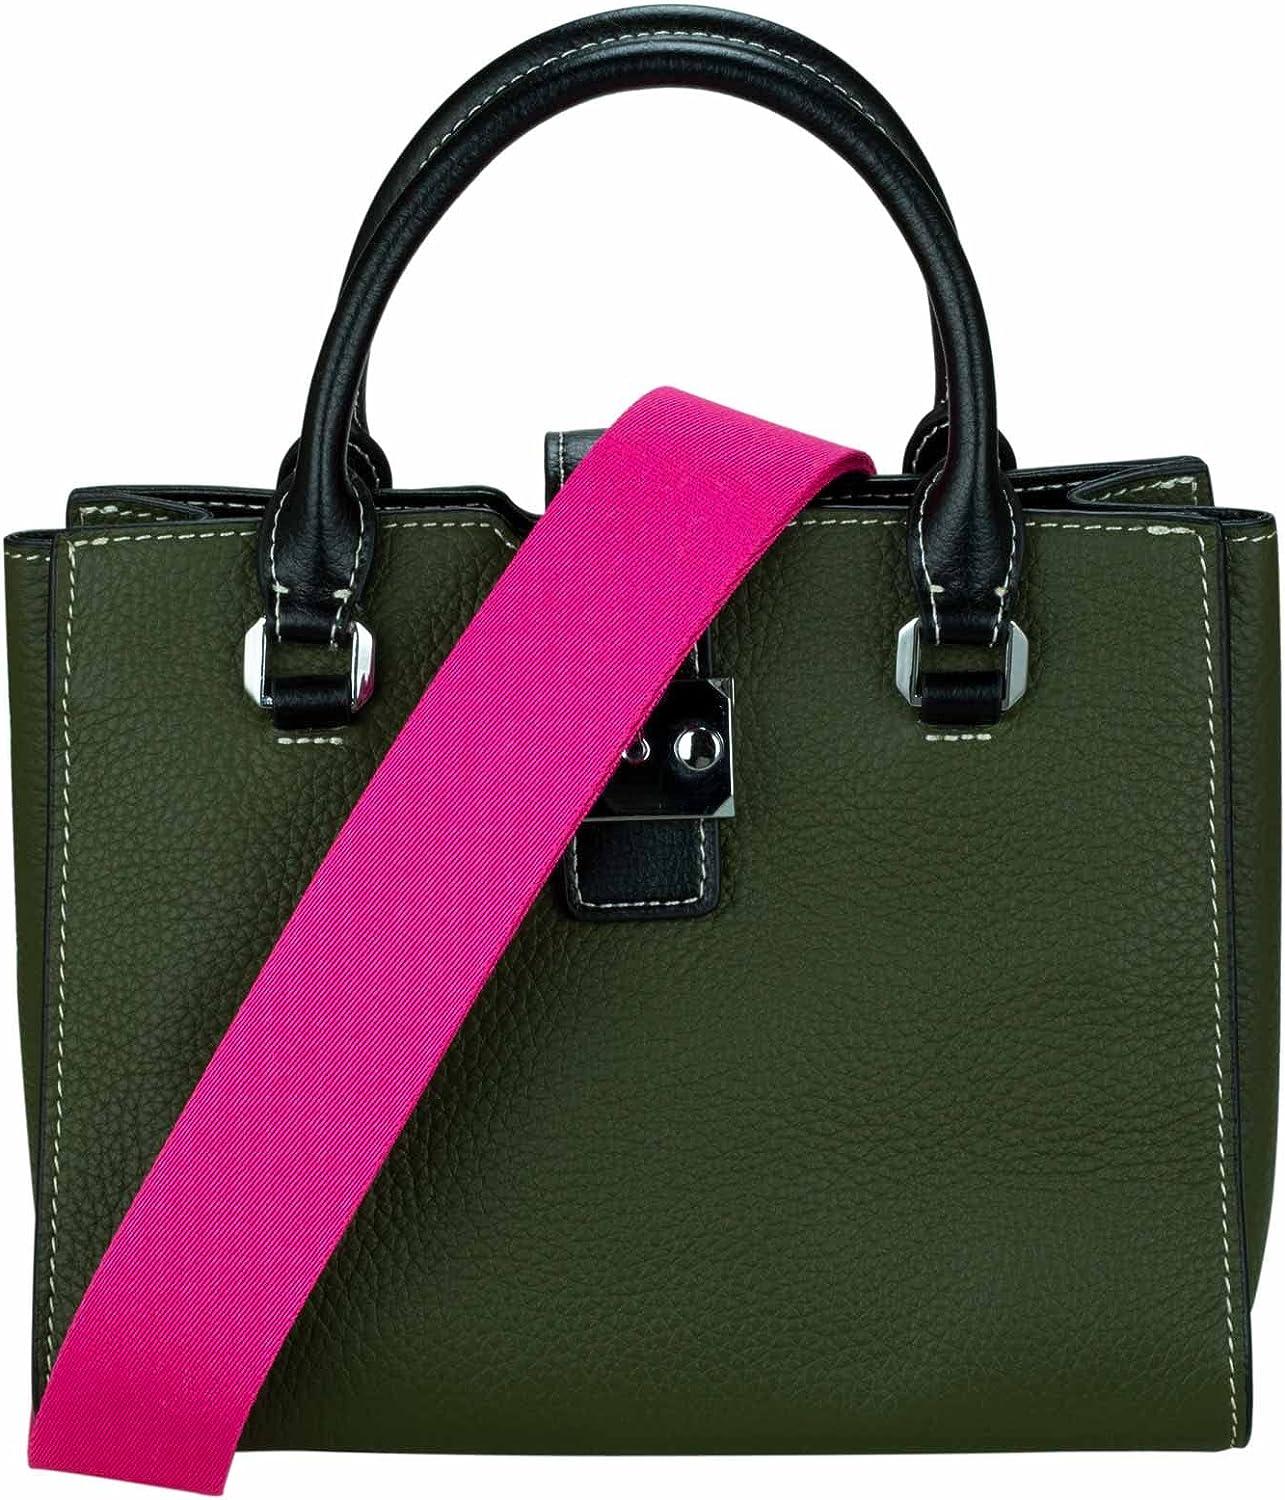 Purse Strap Adjustable Bag Strap Crossbody Straps for Purses Silver Clasps  Bag Straps Replacement Crossbody Purse Straps for Handbags Light Pink